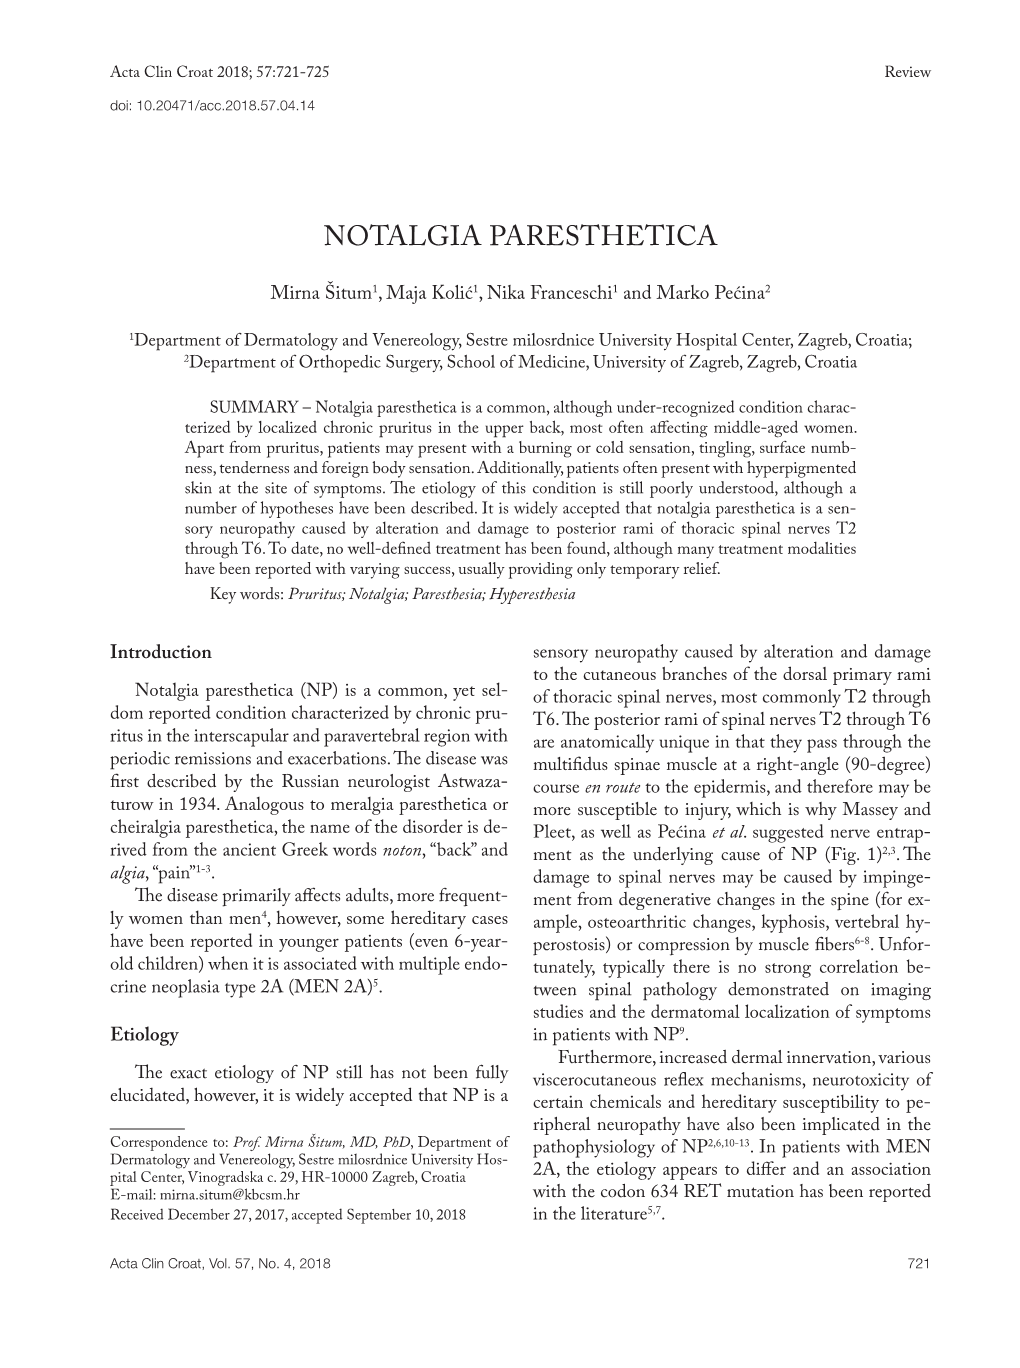 Notalgia Paresthetica